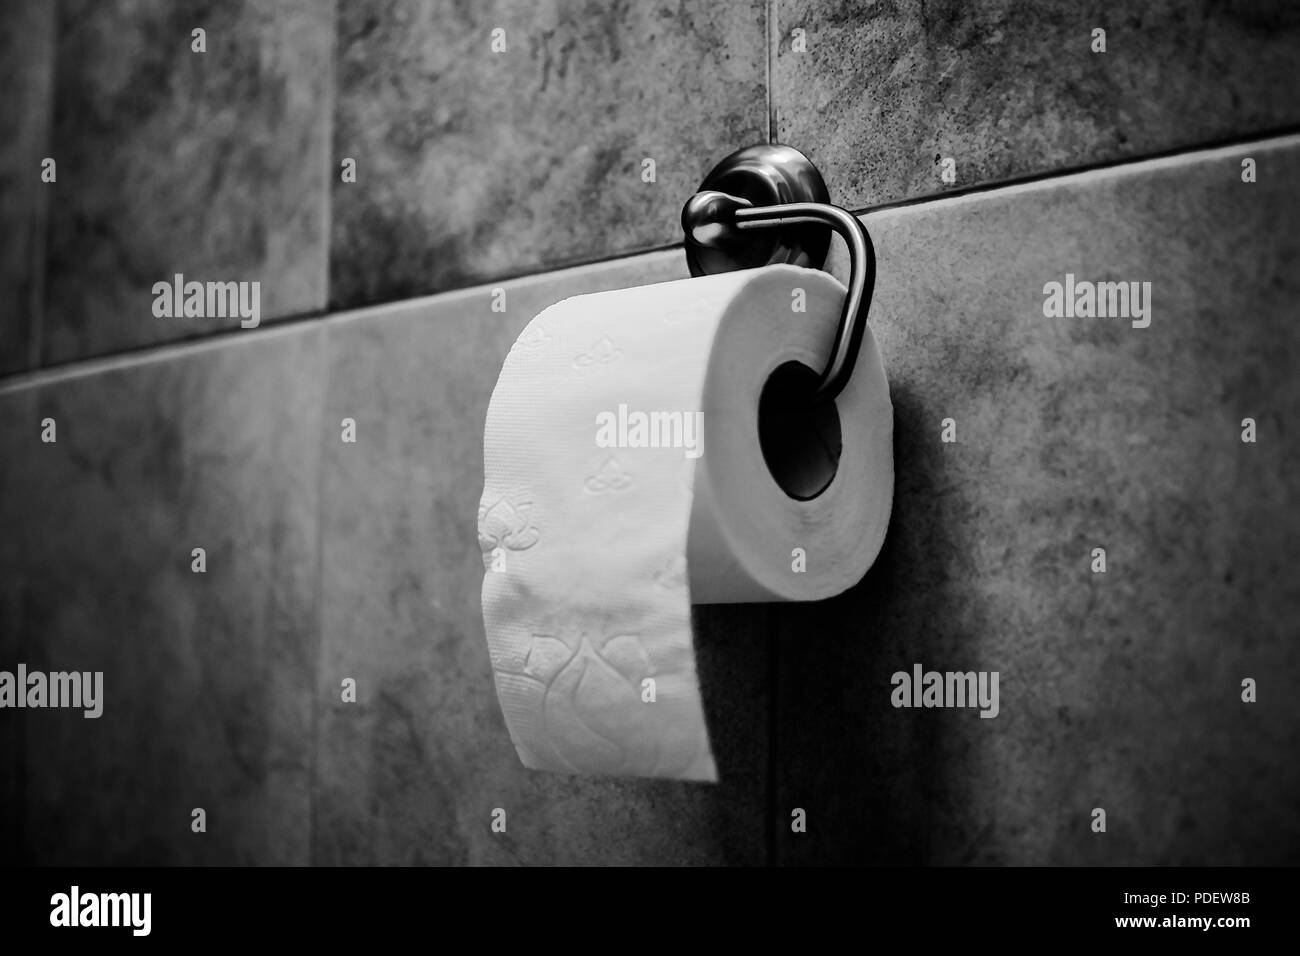 white toilet paper on chrome holder Stock Photo